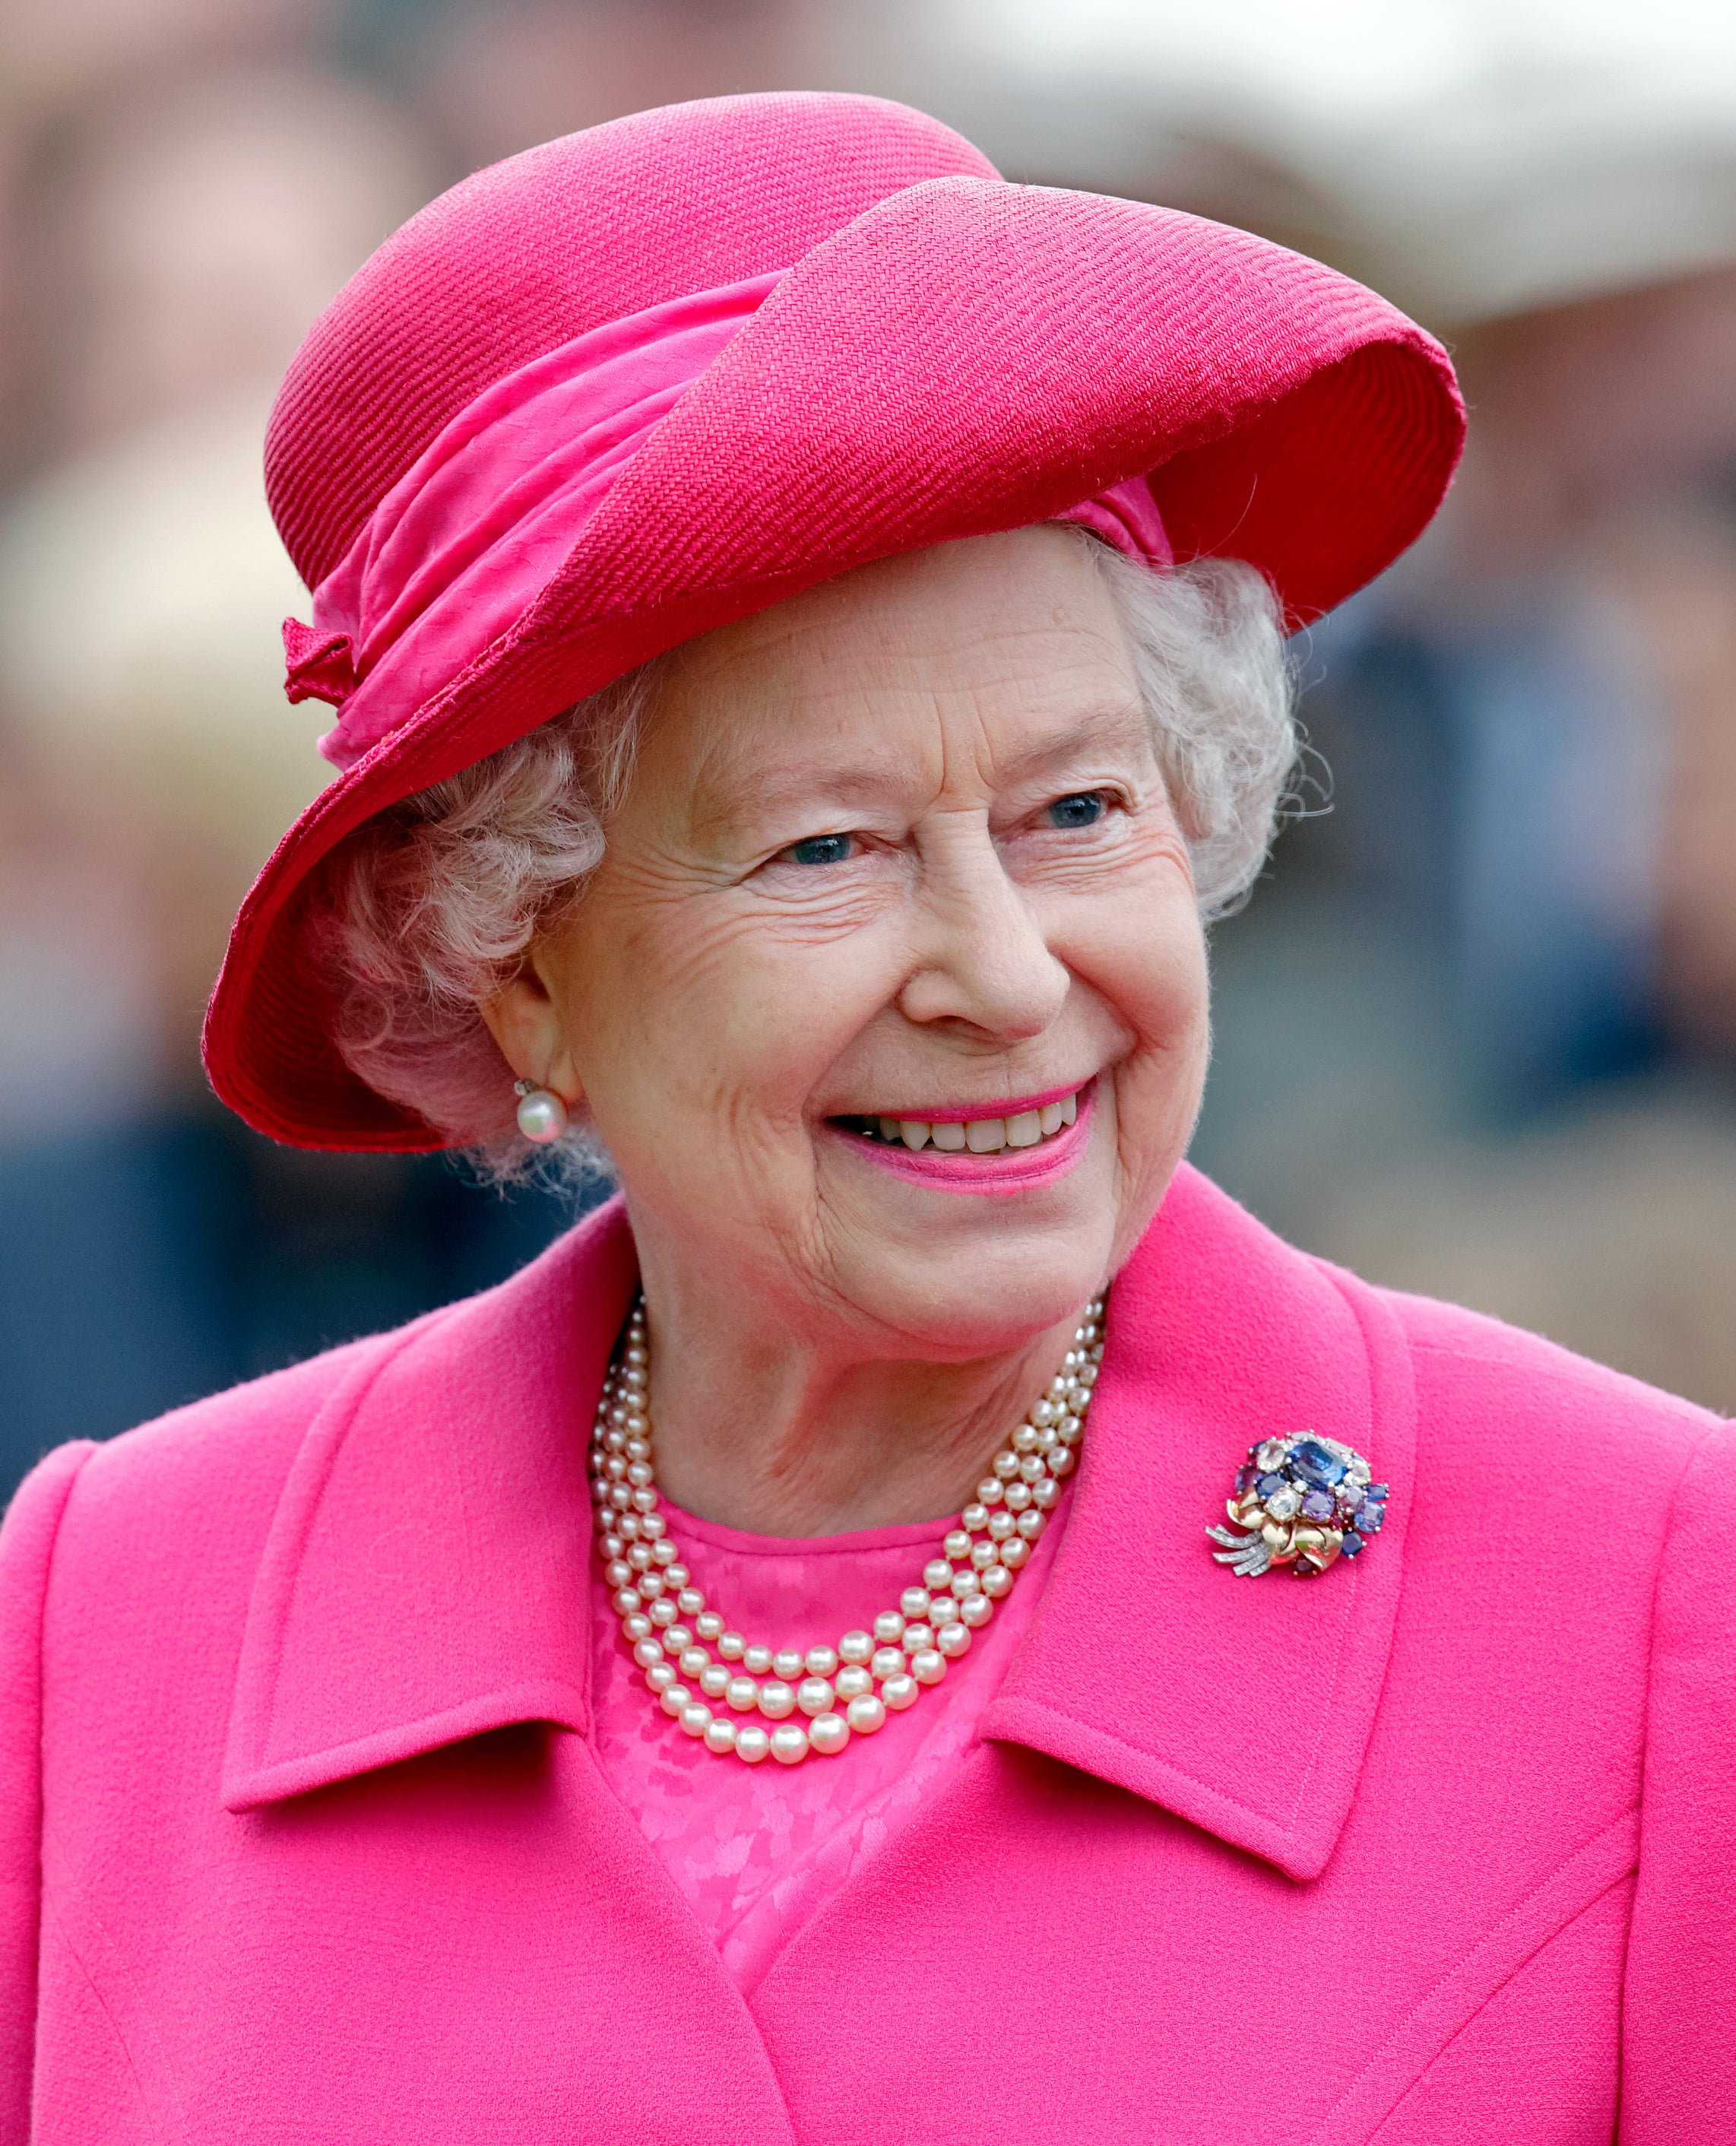 Who was Queen Elizabeth II?